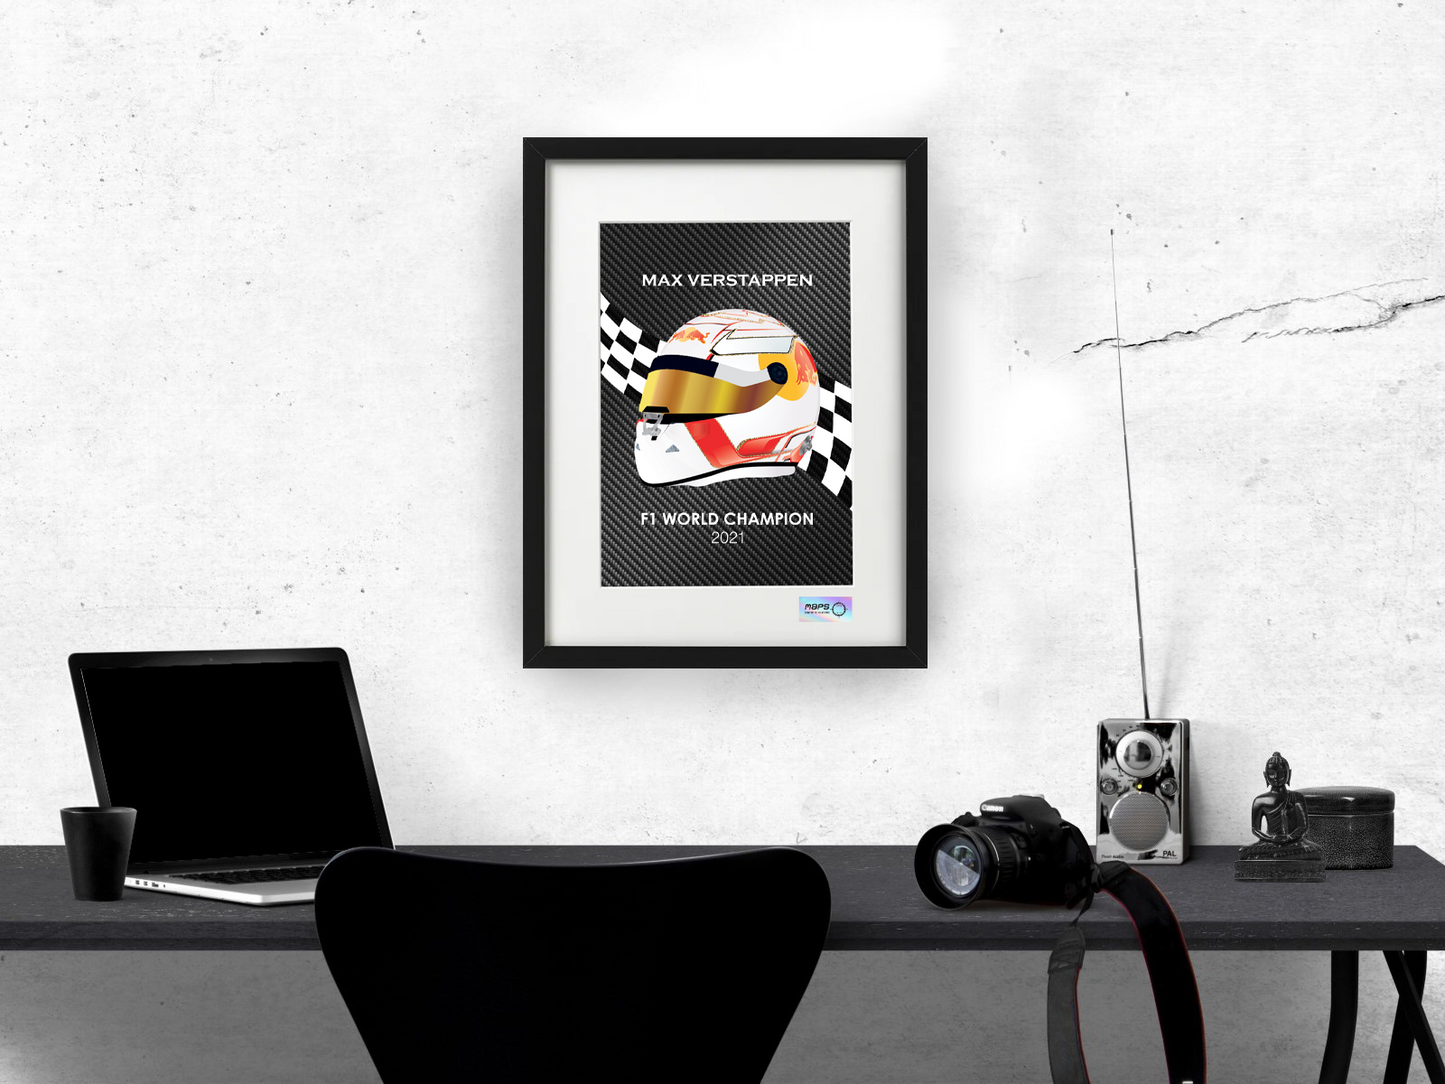 Quadro Carbonio - Max Verstappen 2021 F1 World Champion